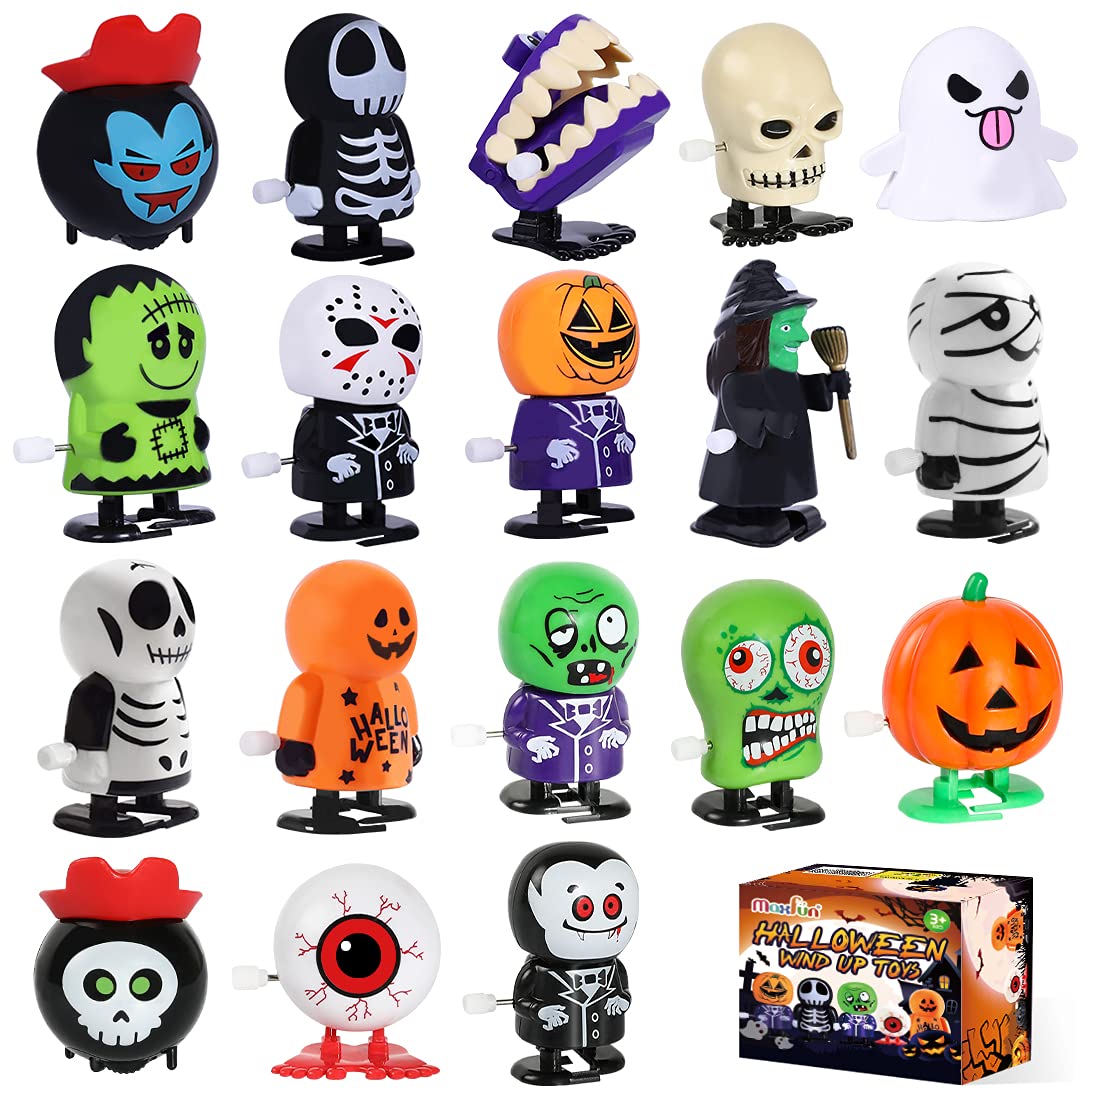 Max Fun 18pcs Halloween Toys Wind Up Toy Assortment for Kids Halloween Party Favors Treat Bag Stuffers Goody Bag Filler Halloween Treats Prizes